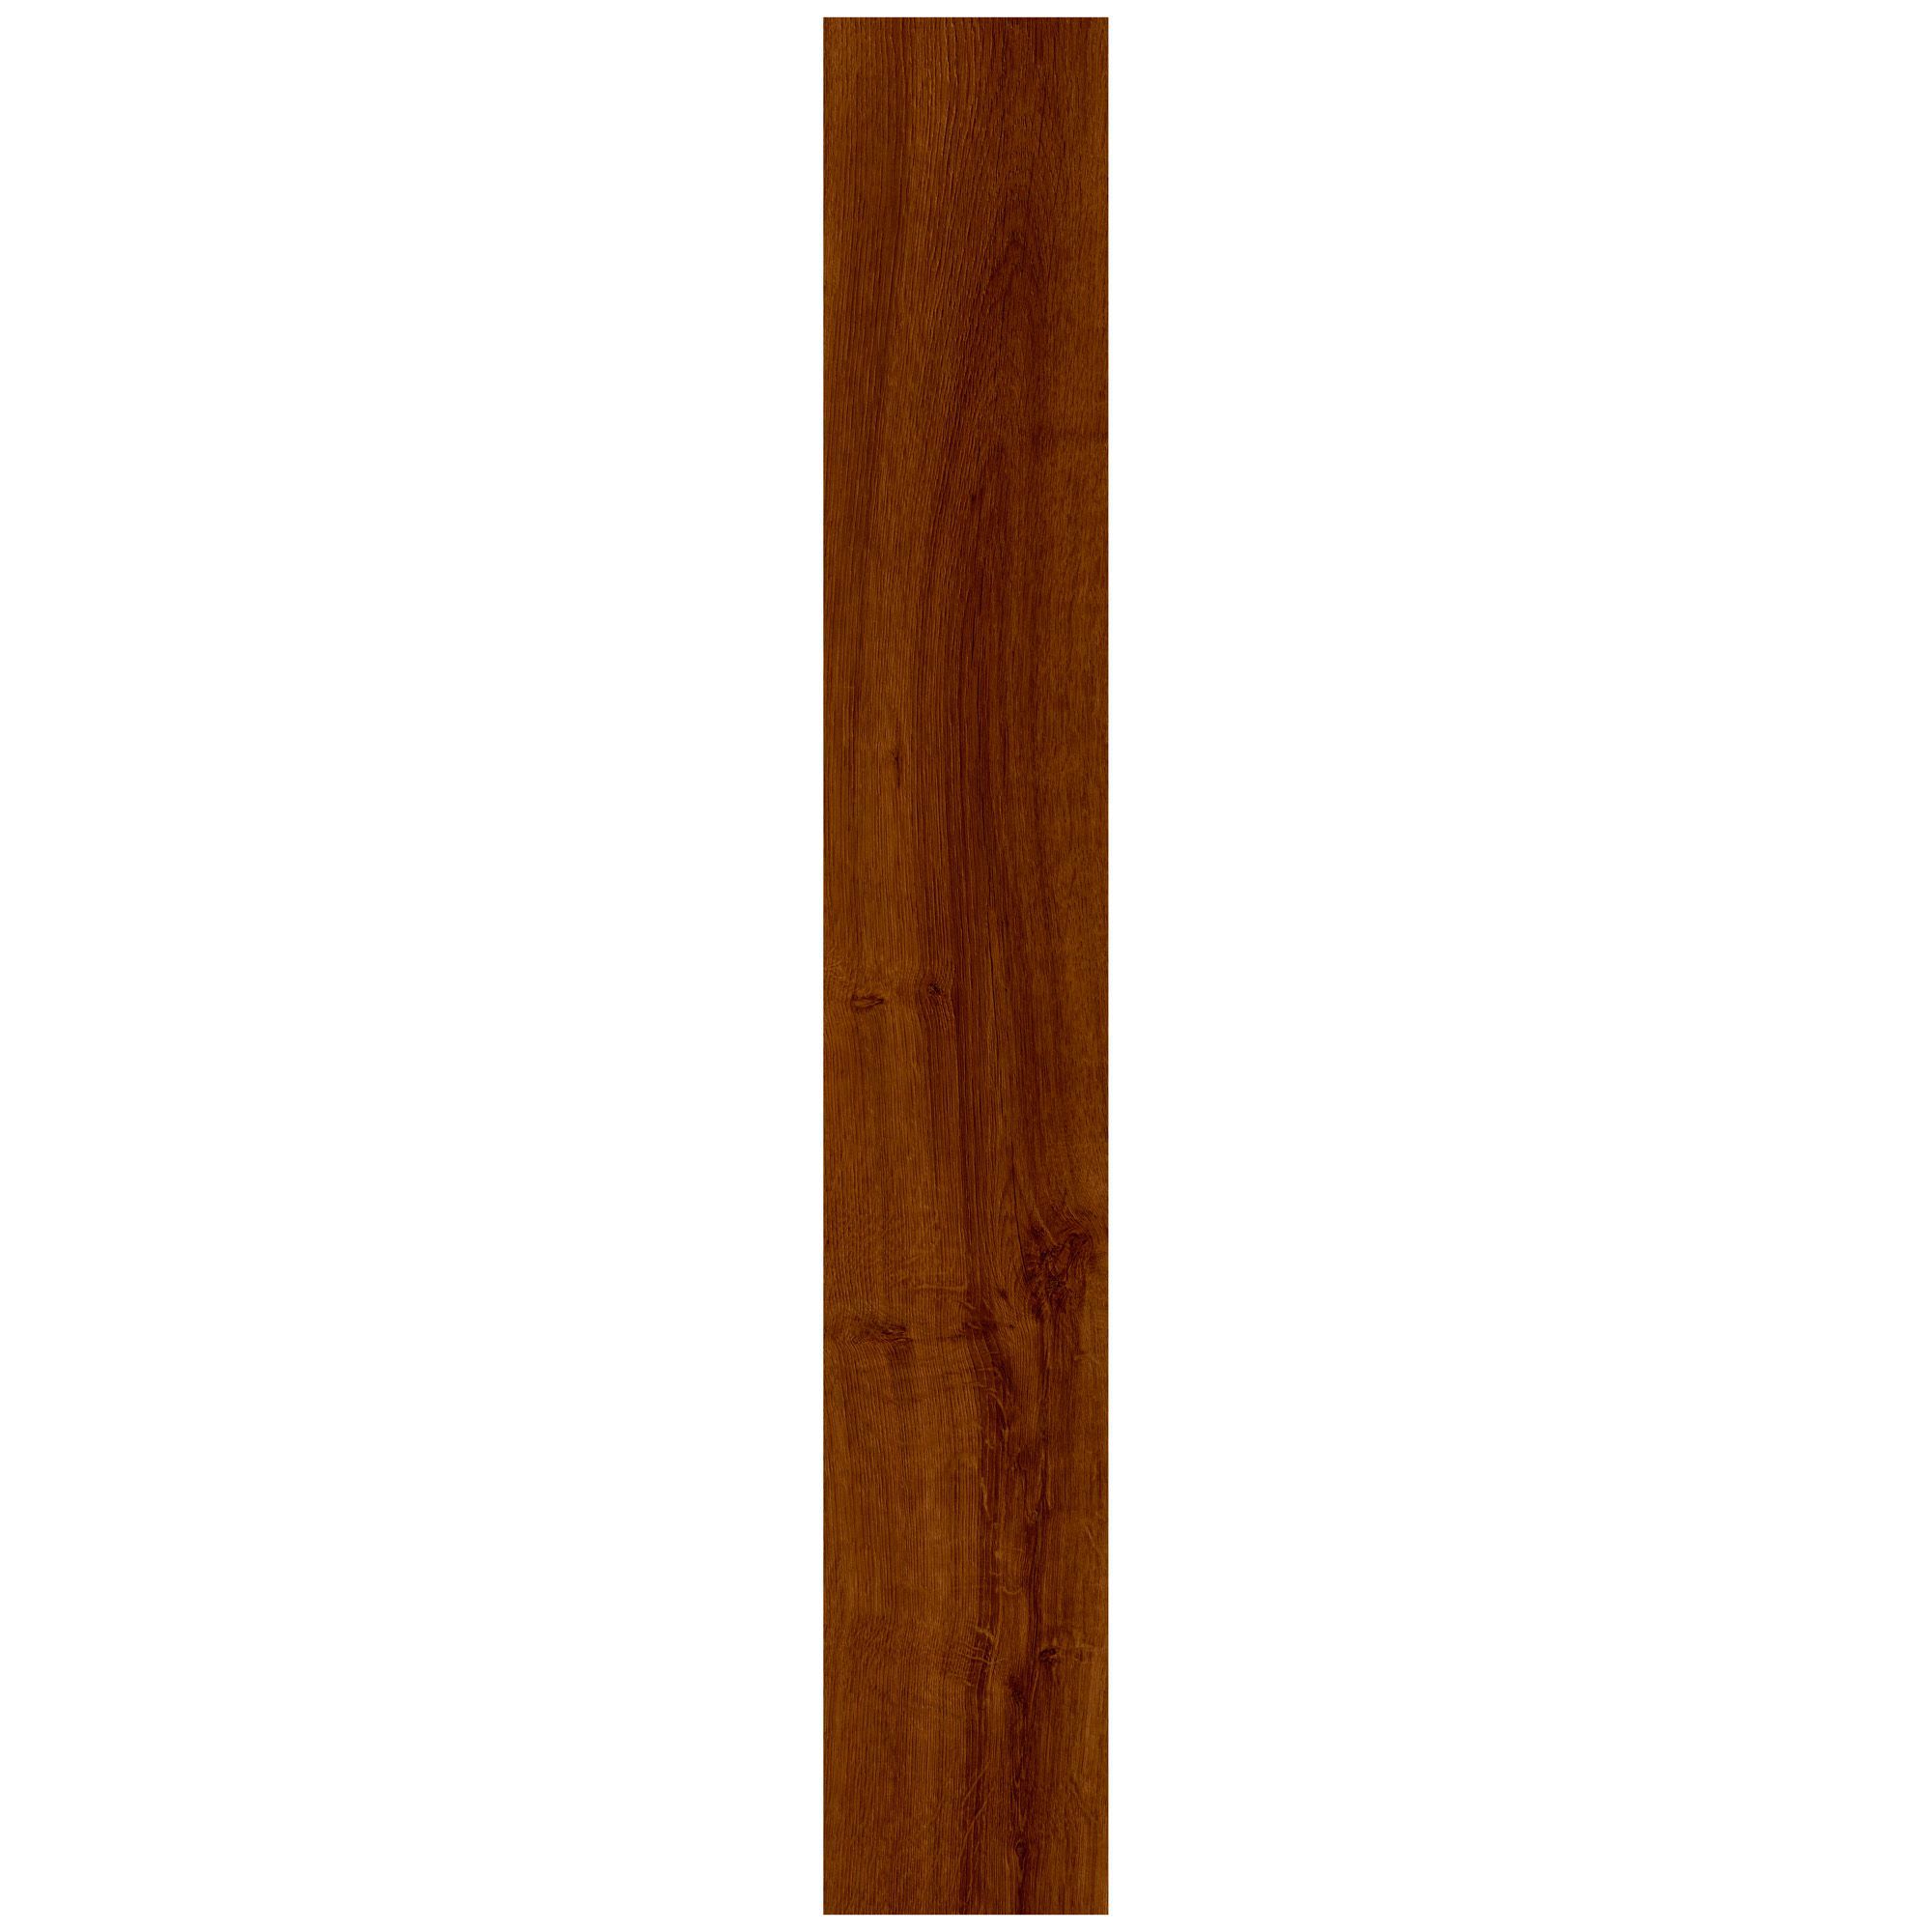 ColoursDark brown Oak effect PVC Luxury vinyl click Luxury vinyl click flooring , (W)191mm